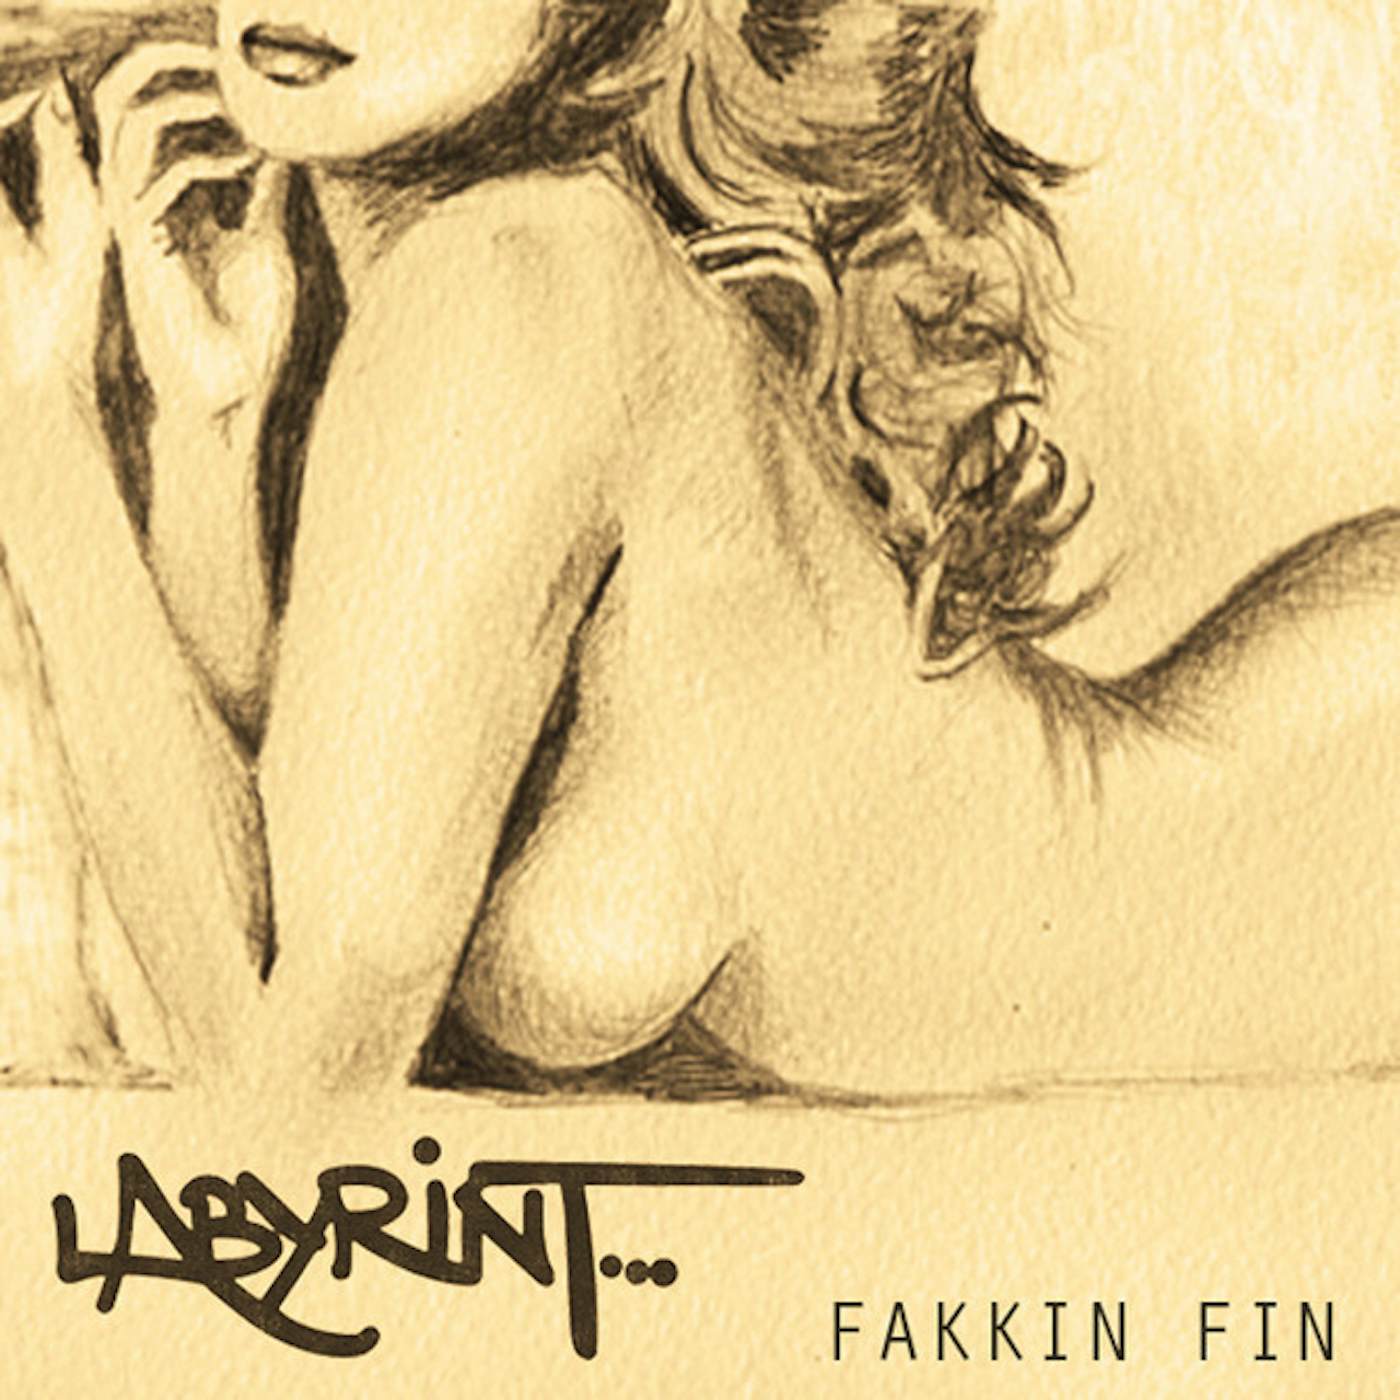 Labyrint Fakkin fin Vinyl Record